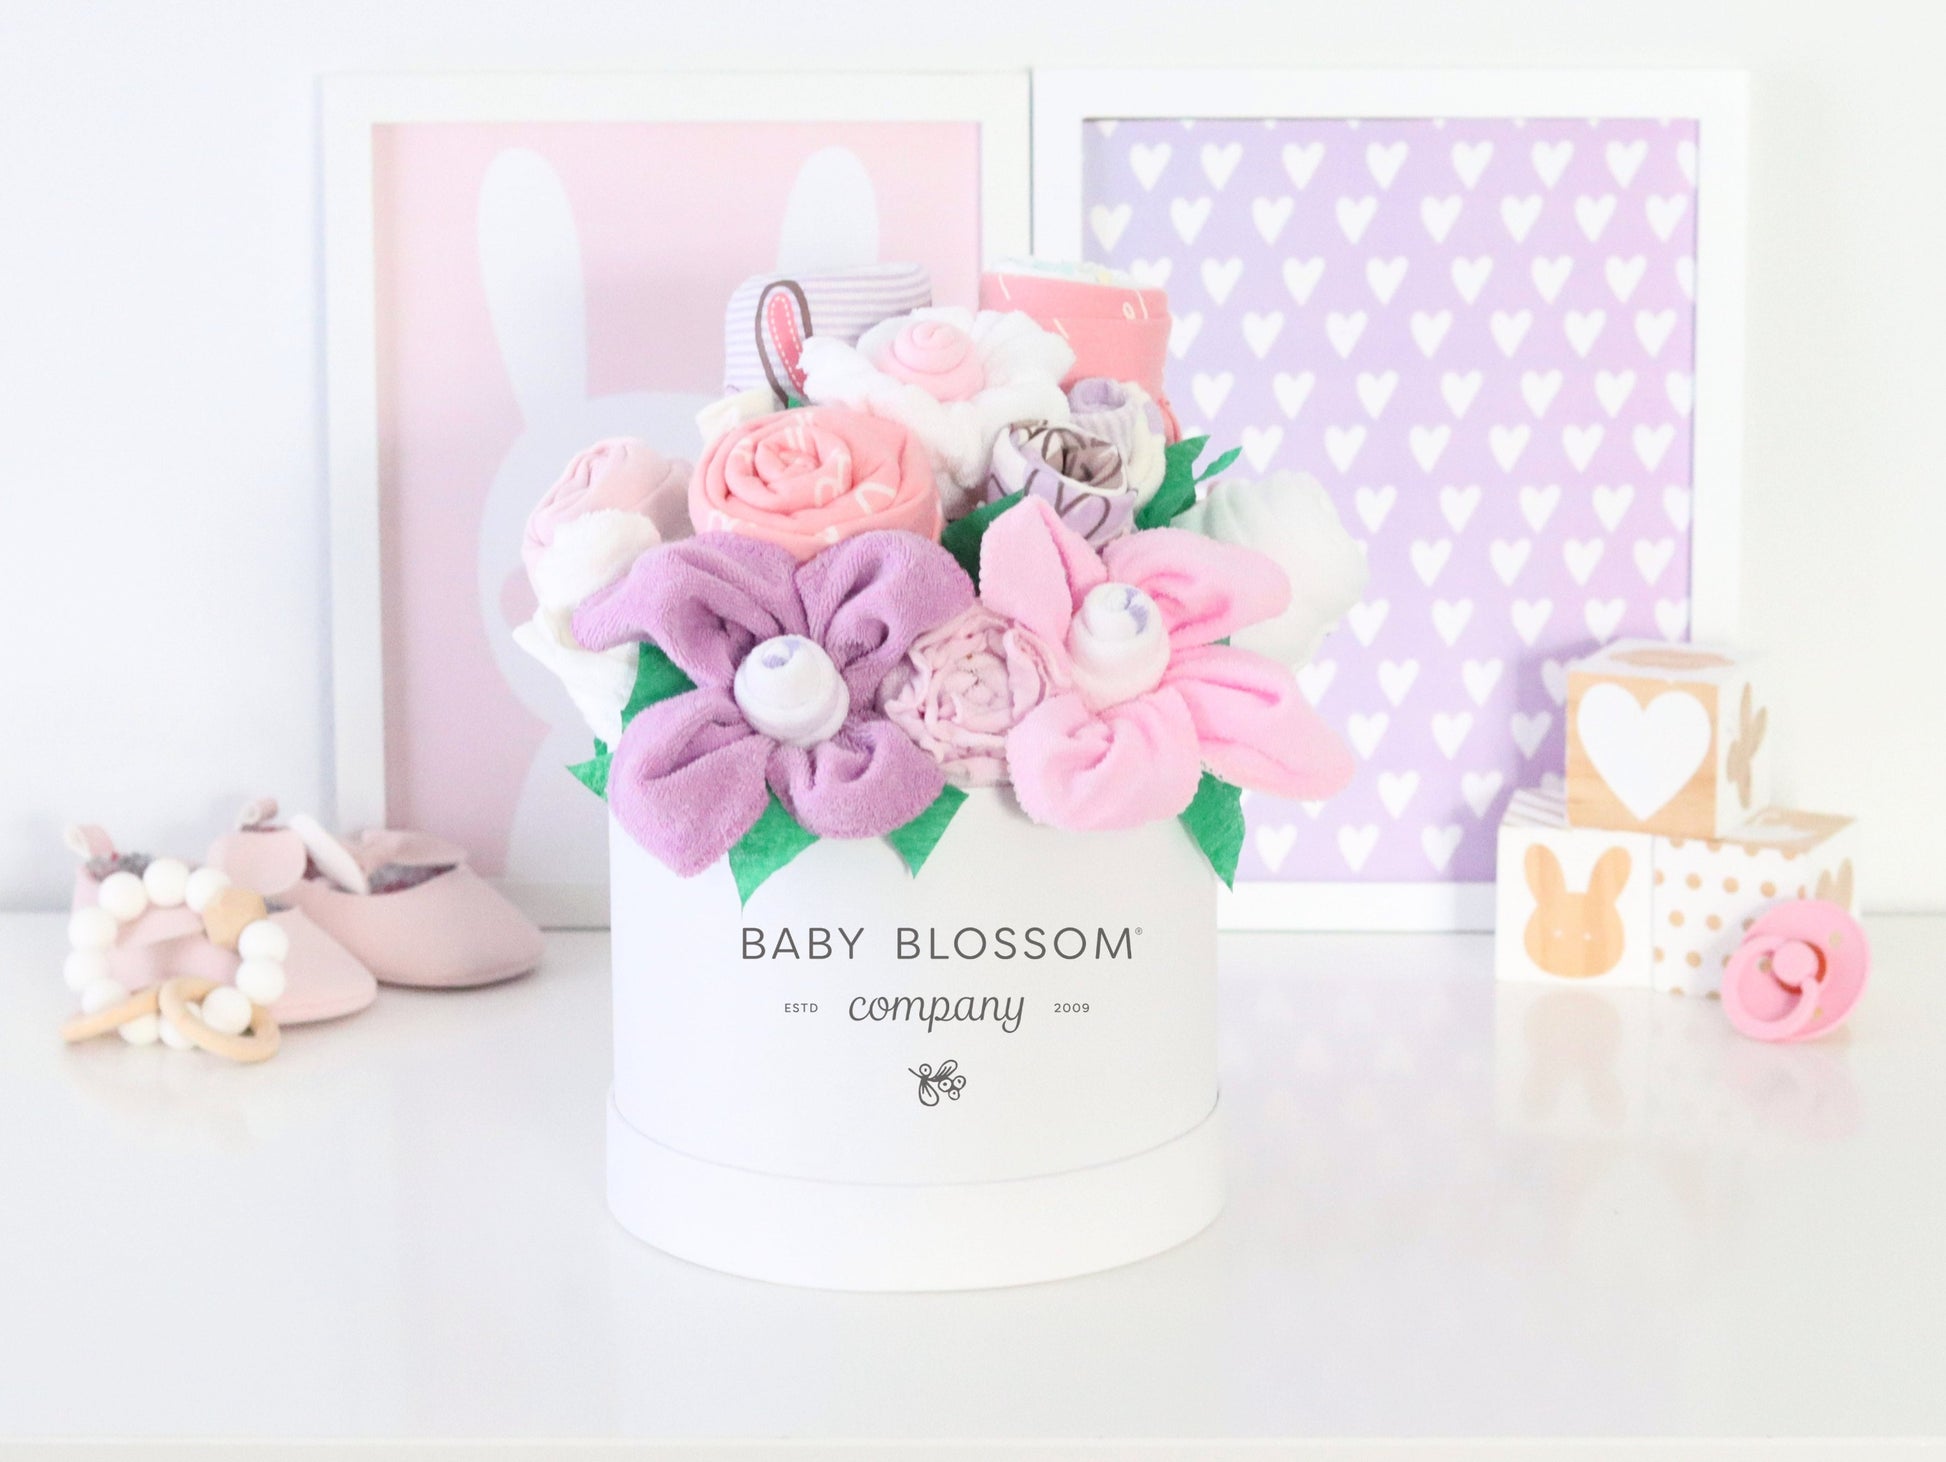 bunny ballerina baby gift box deluxe with baby blossom logo